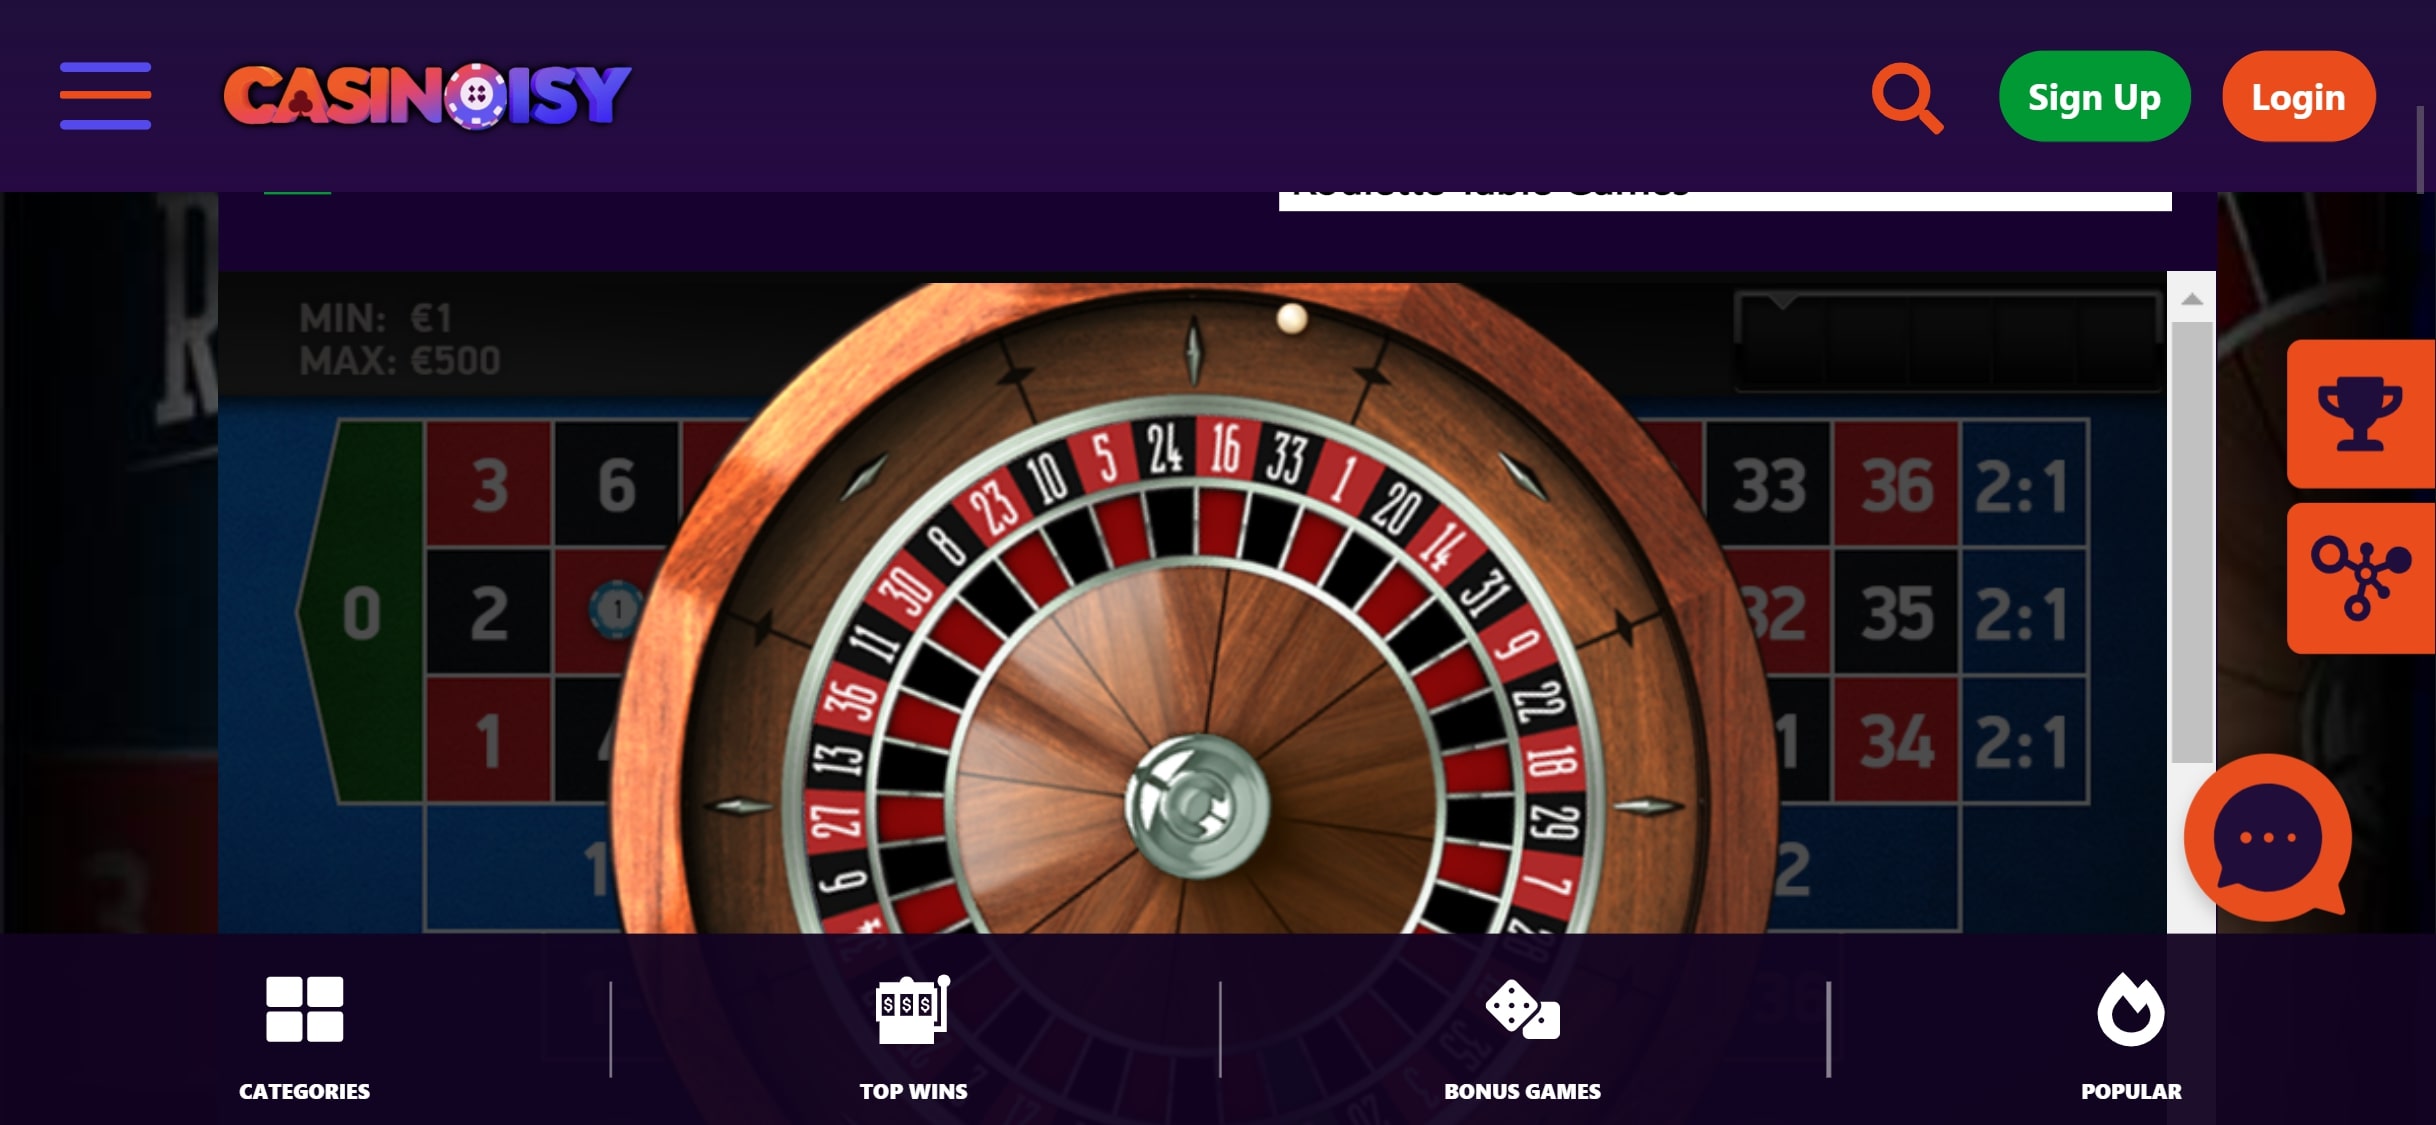 Casinoisy casino Mobile Casino Games Review